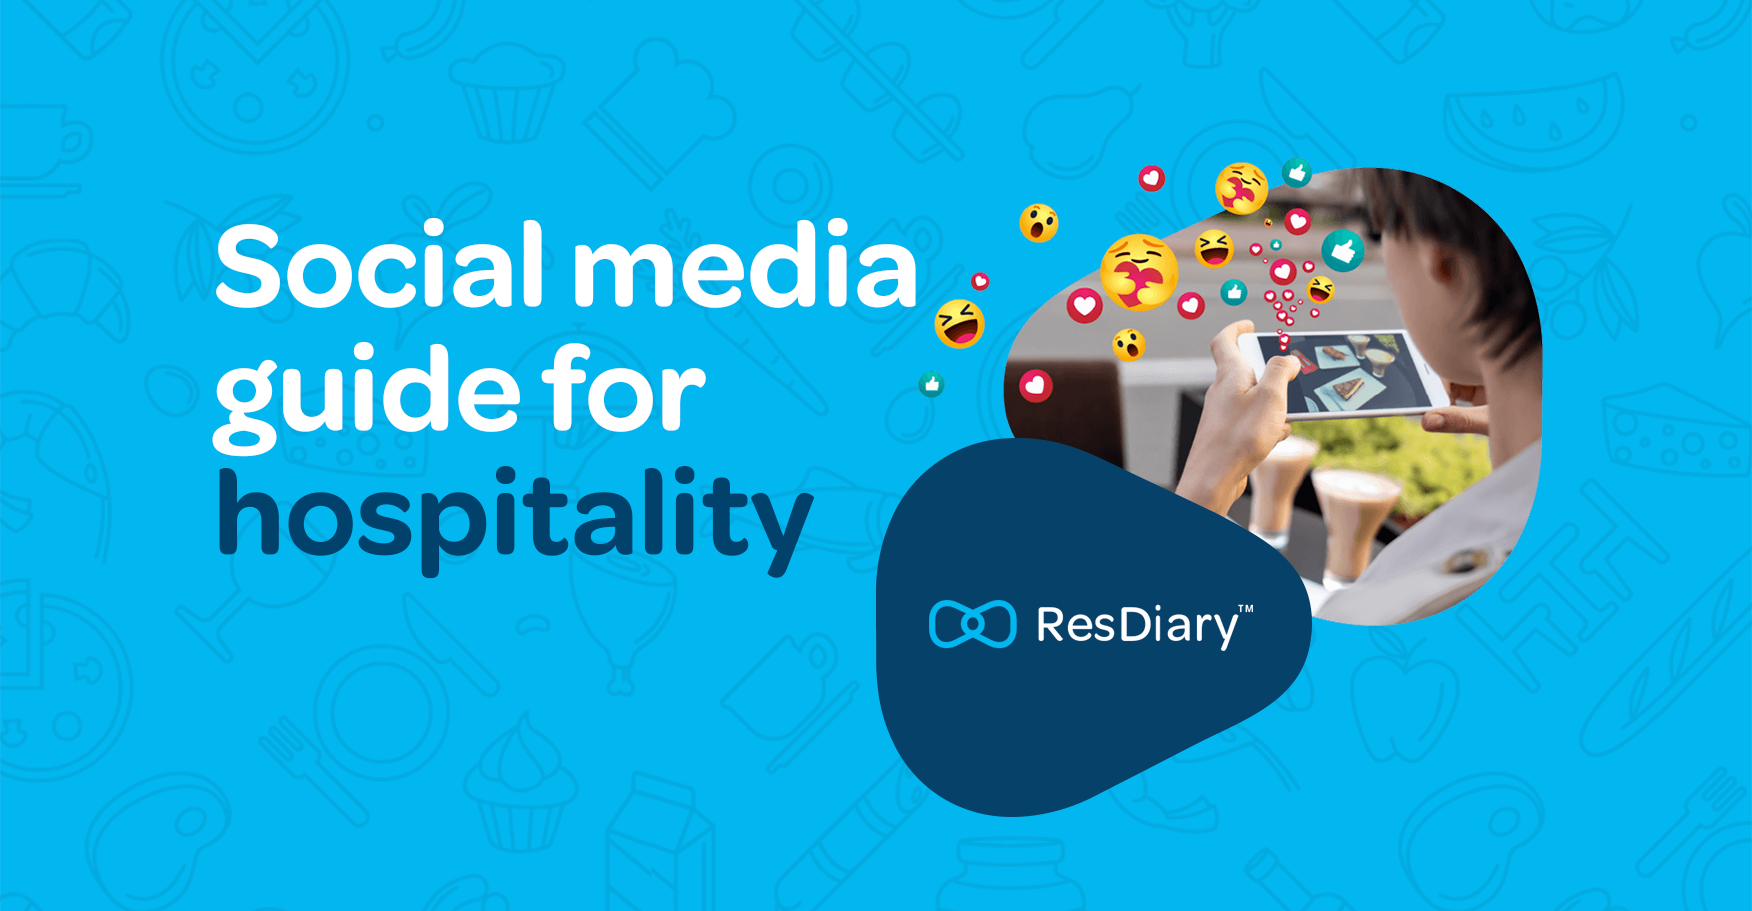 The Social Media Guide for Hospitality